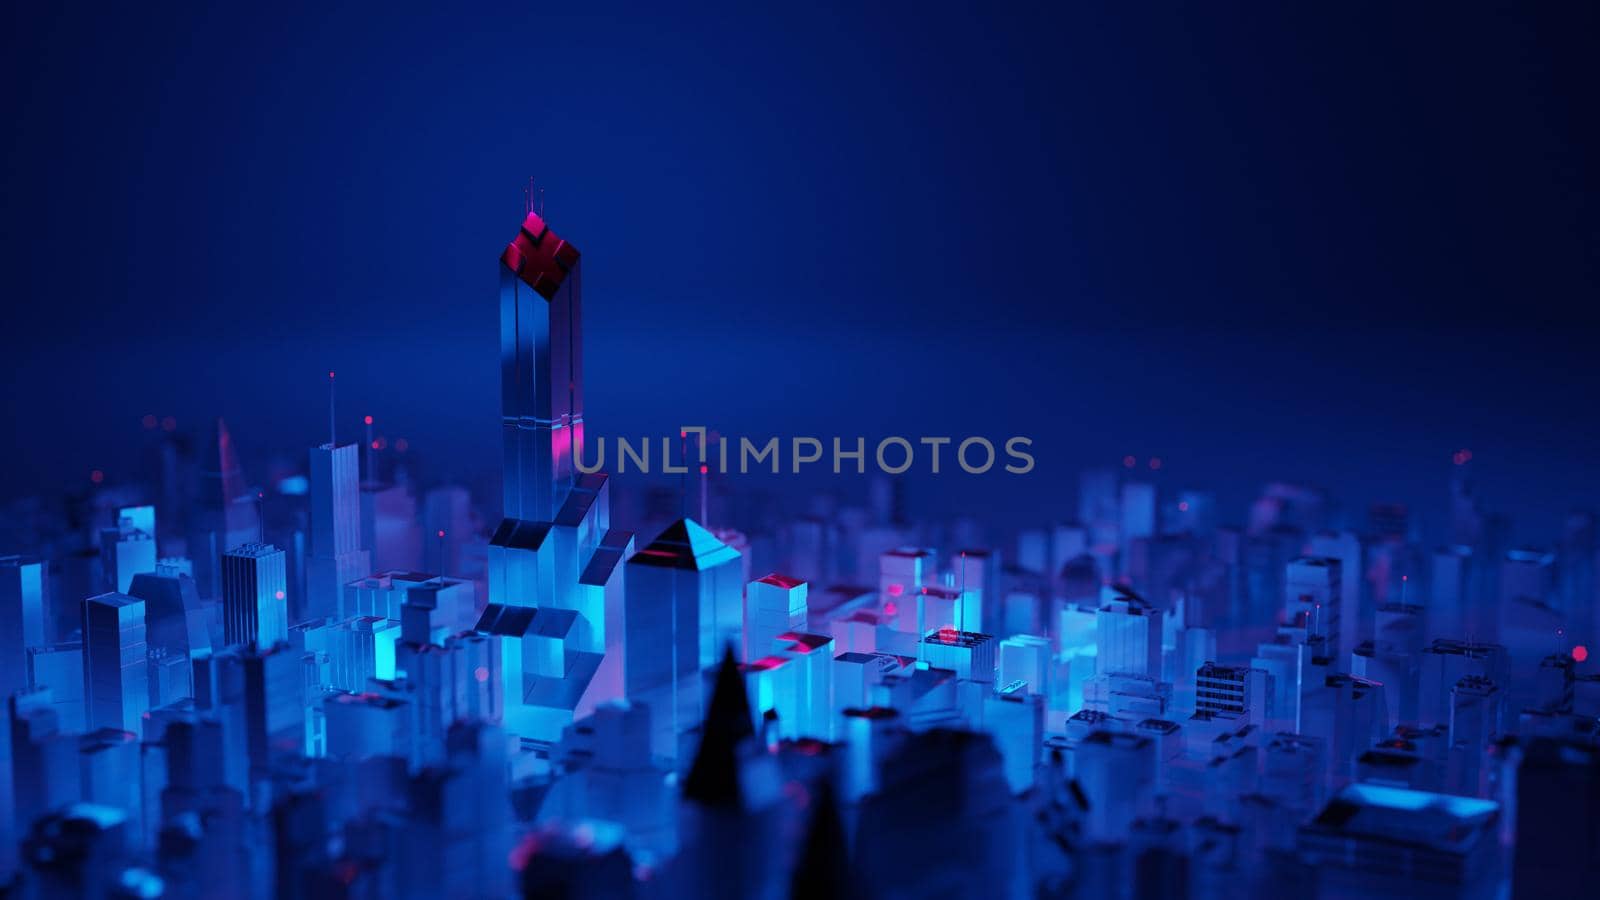 Futuristic city skyline at night with neon cyberpunk aesthetic. Digital 3D render.